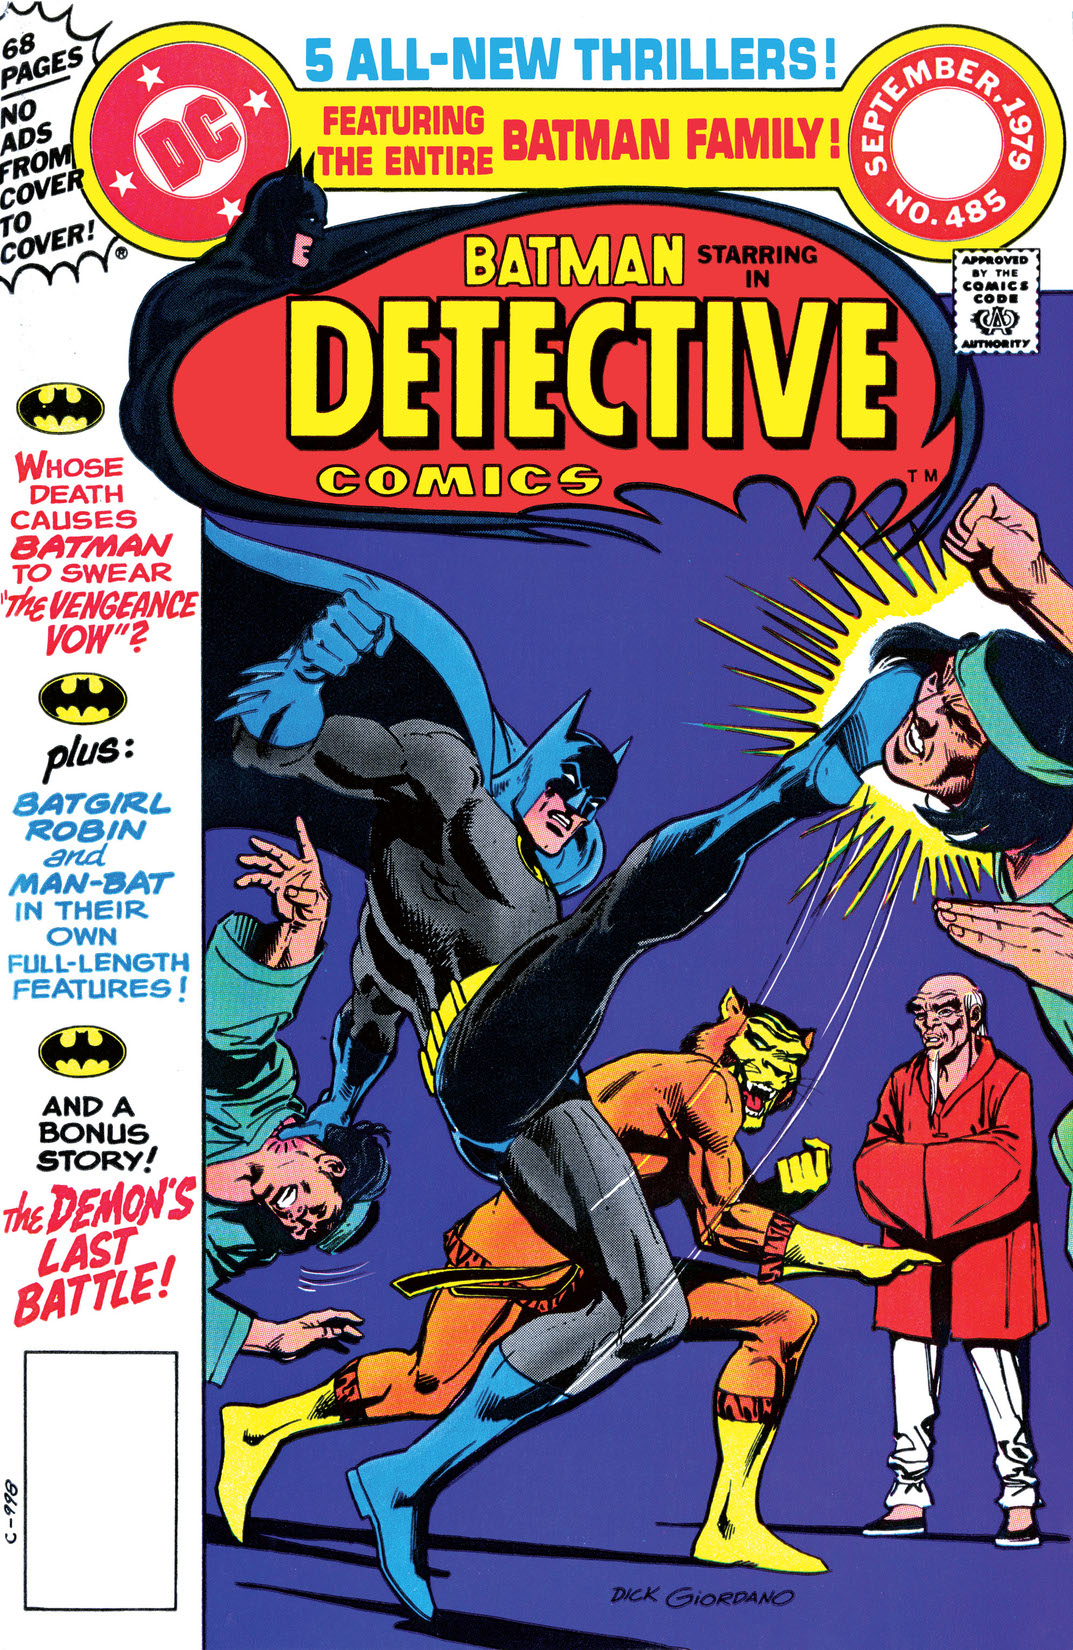 Detective Comics (1937-) #485 preview images